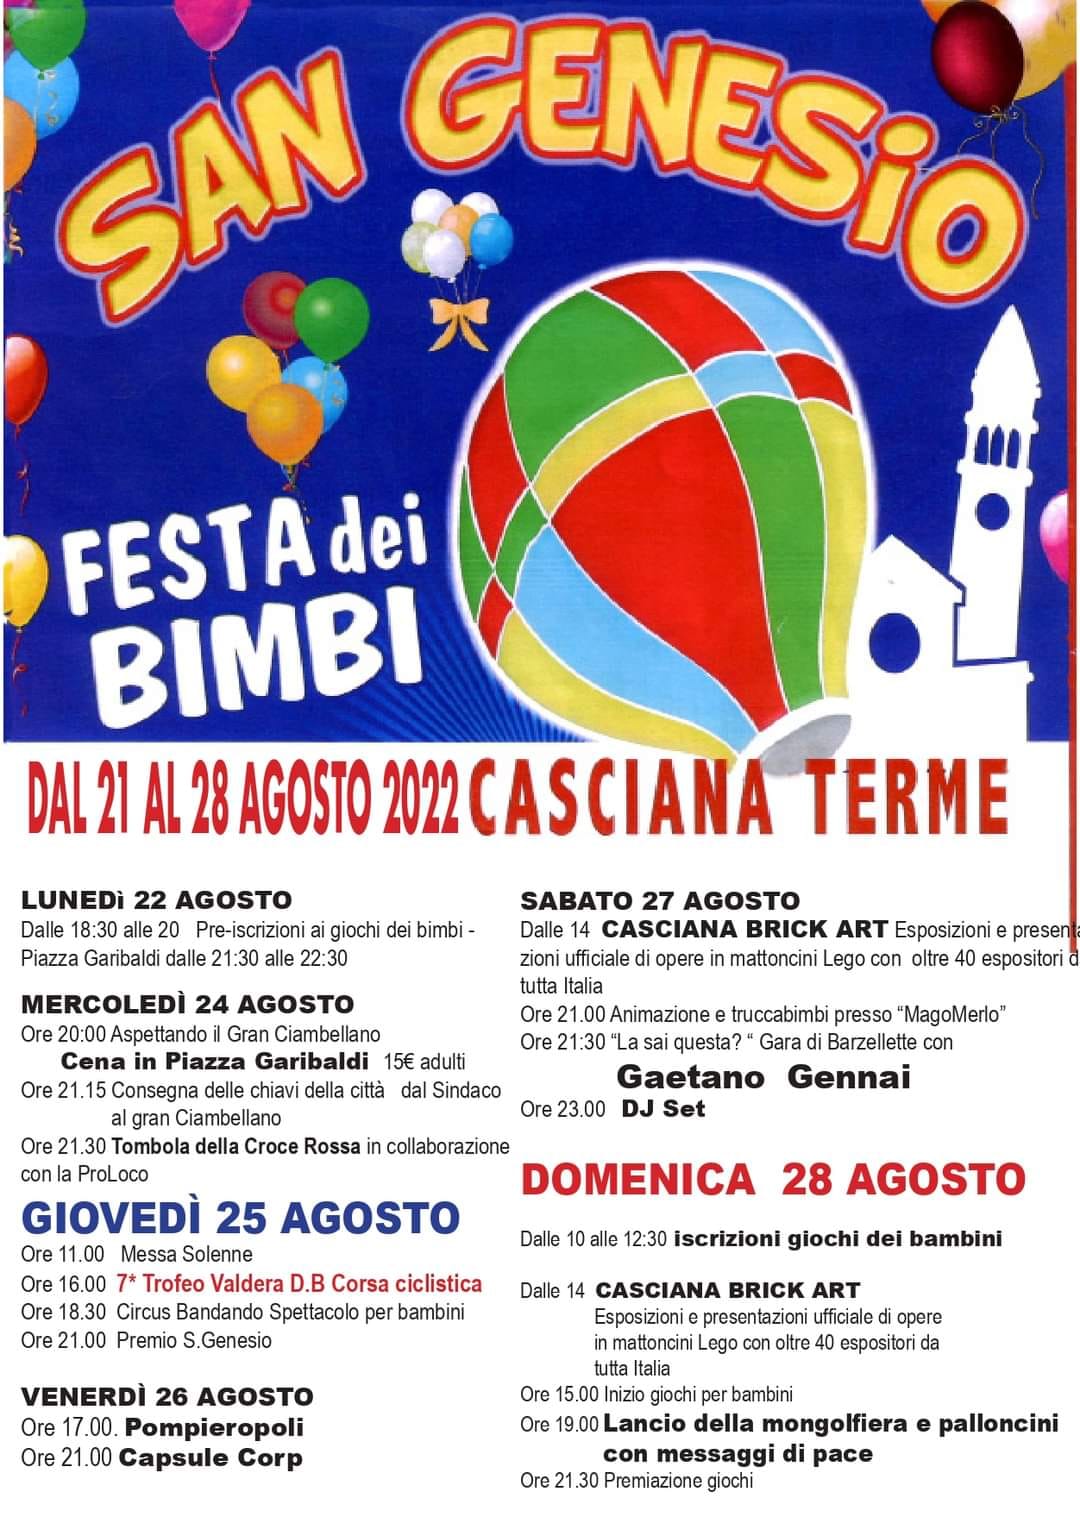 La “stellare” festa dei Bimbi di San Genesio, a Casciana Terme